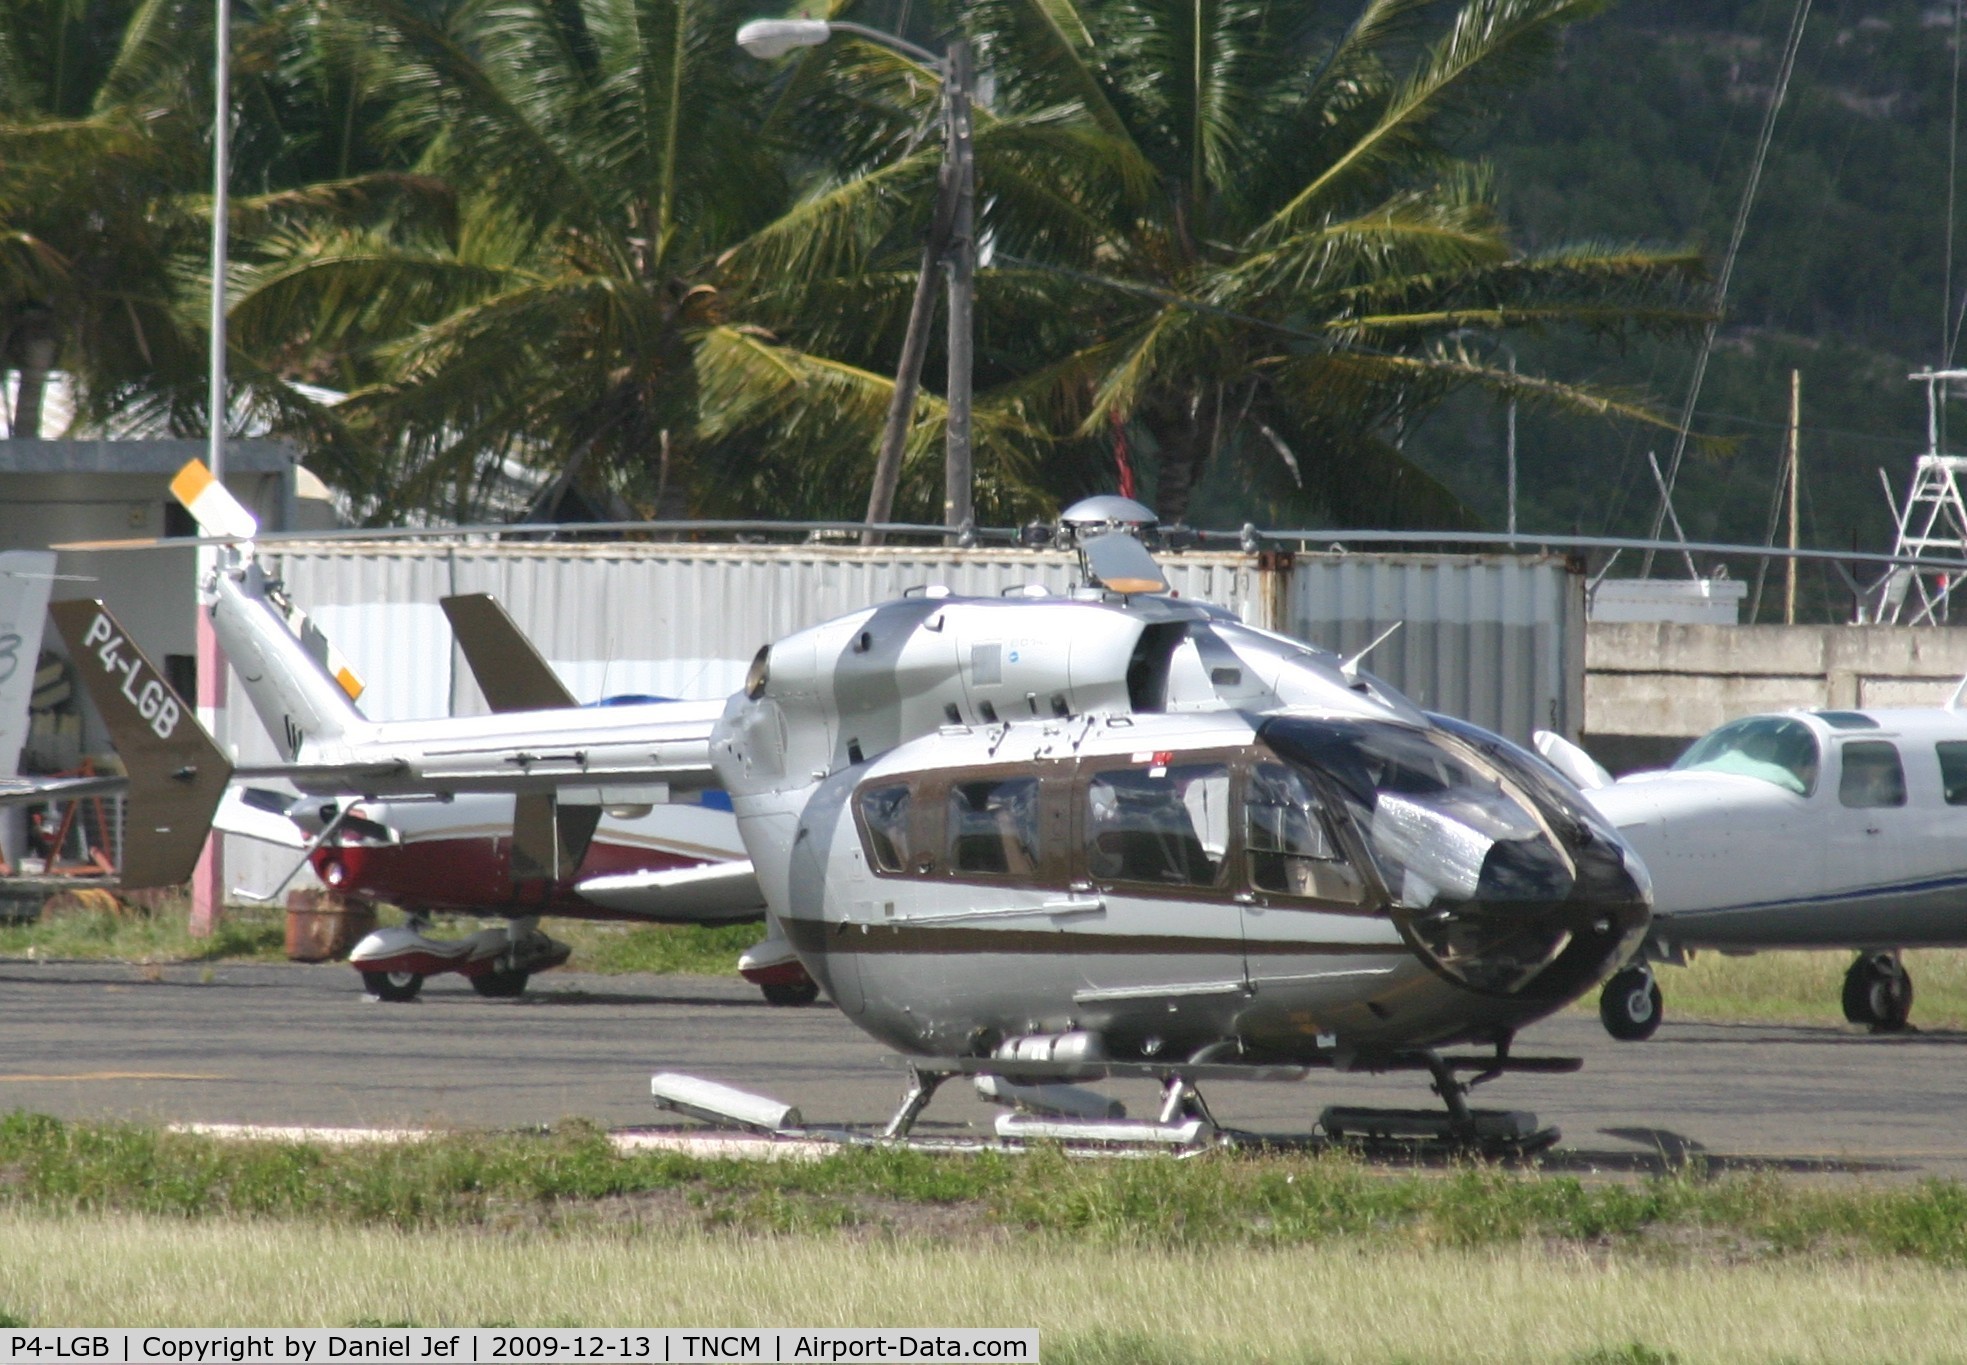 P4-LGB, 2004 Eurocopter-Kawasaki BK-117C-2 C/N 9052, P4-LGB park at the helipad